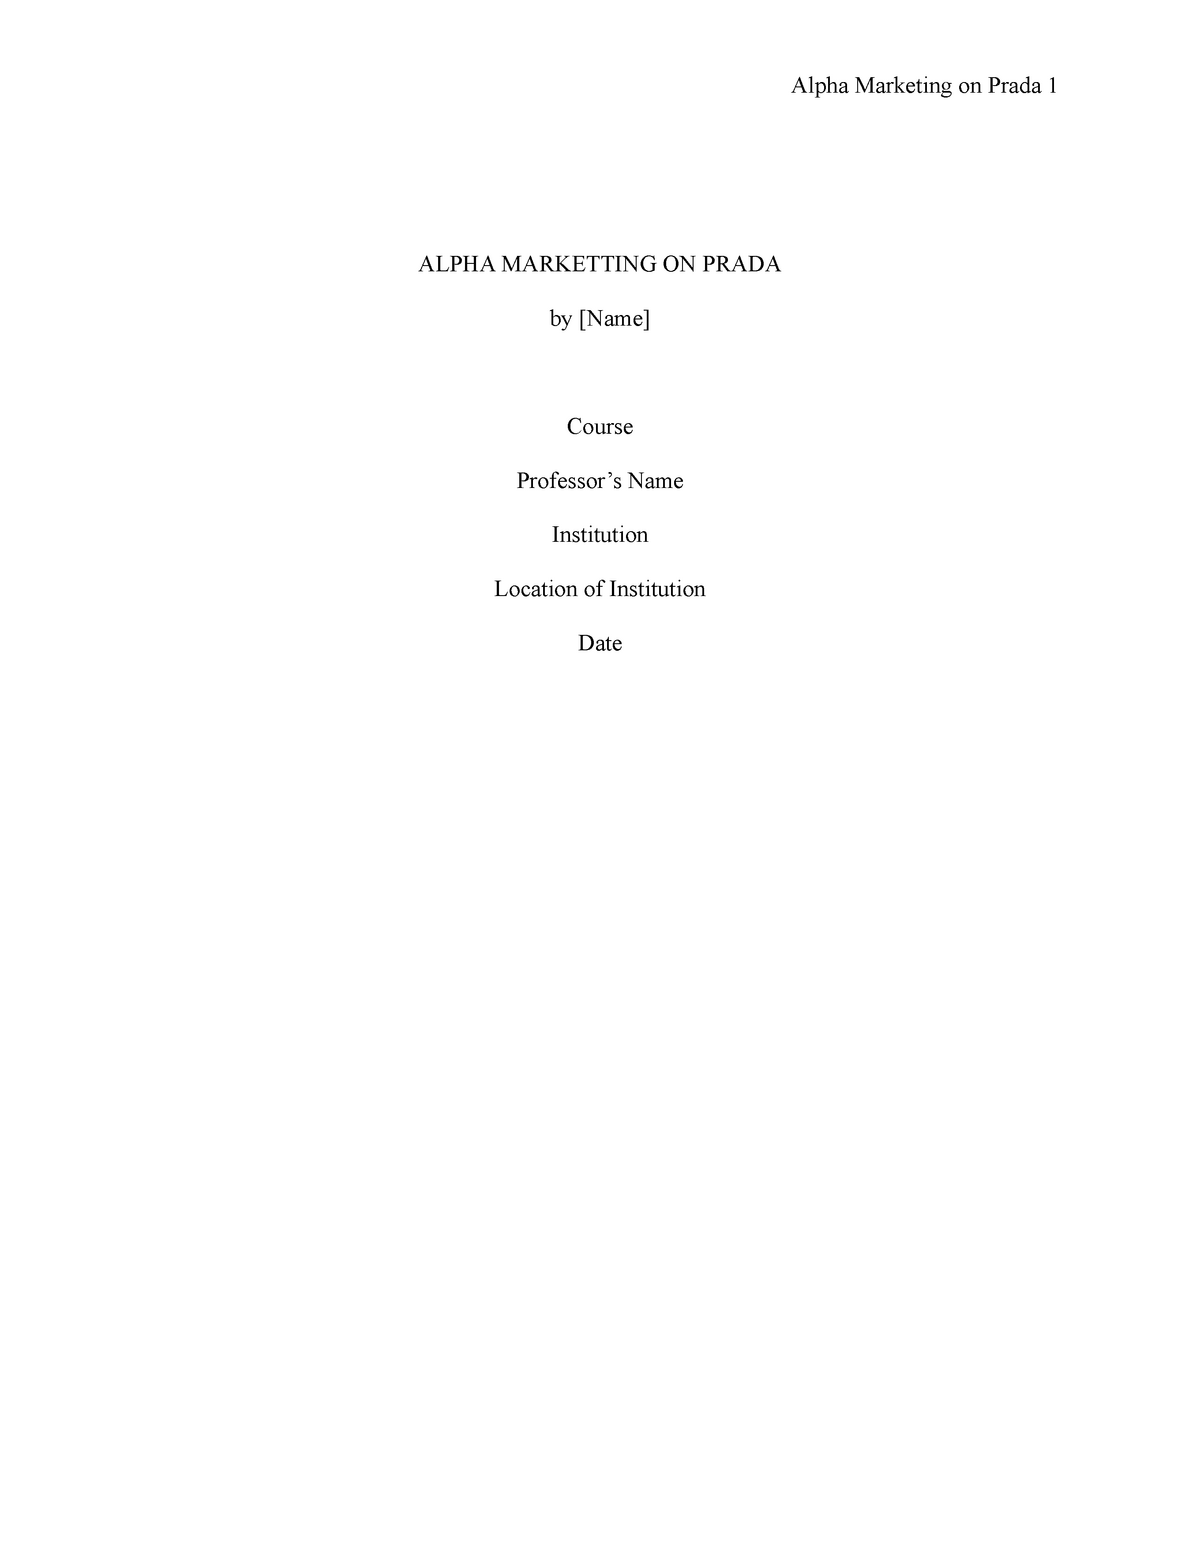 Extended Marketing Analysis of Prada Company - ALPHA MARKETTING ON PRADA by  [Name] Course - Studocu